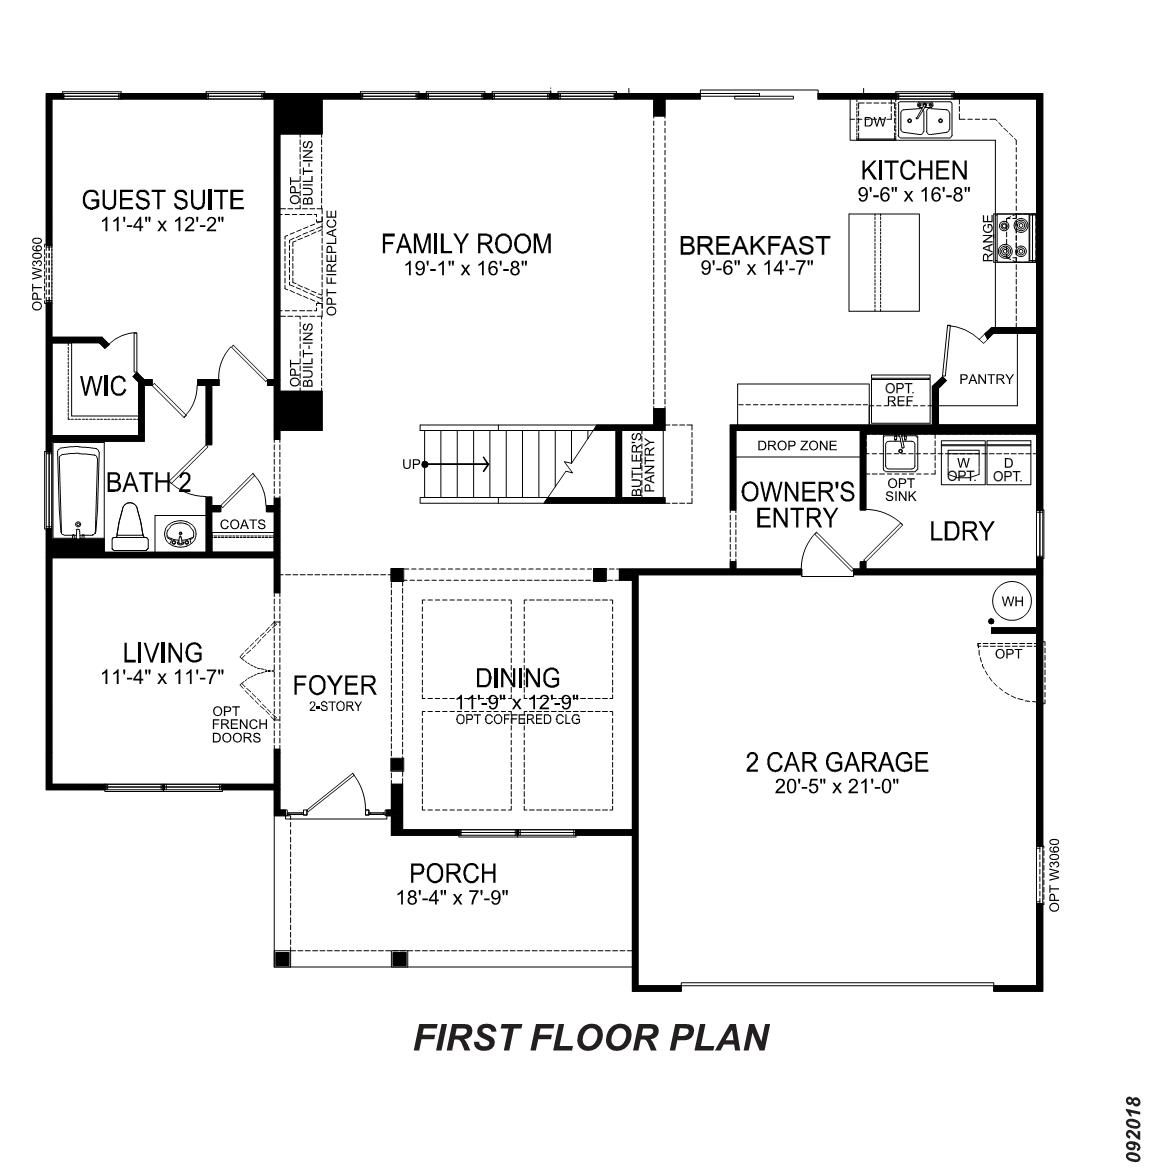 Washington first floor plan